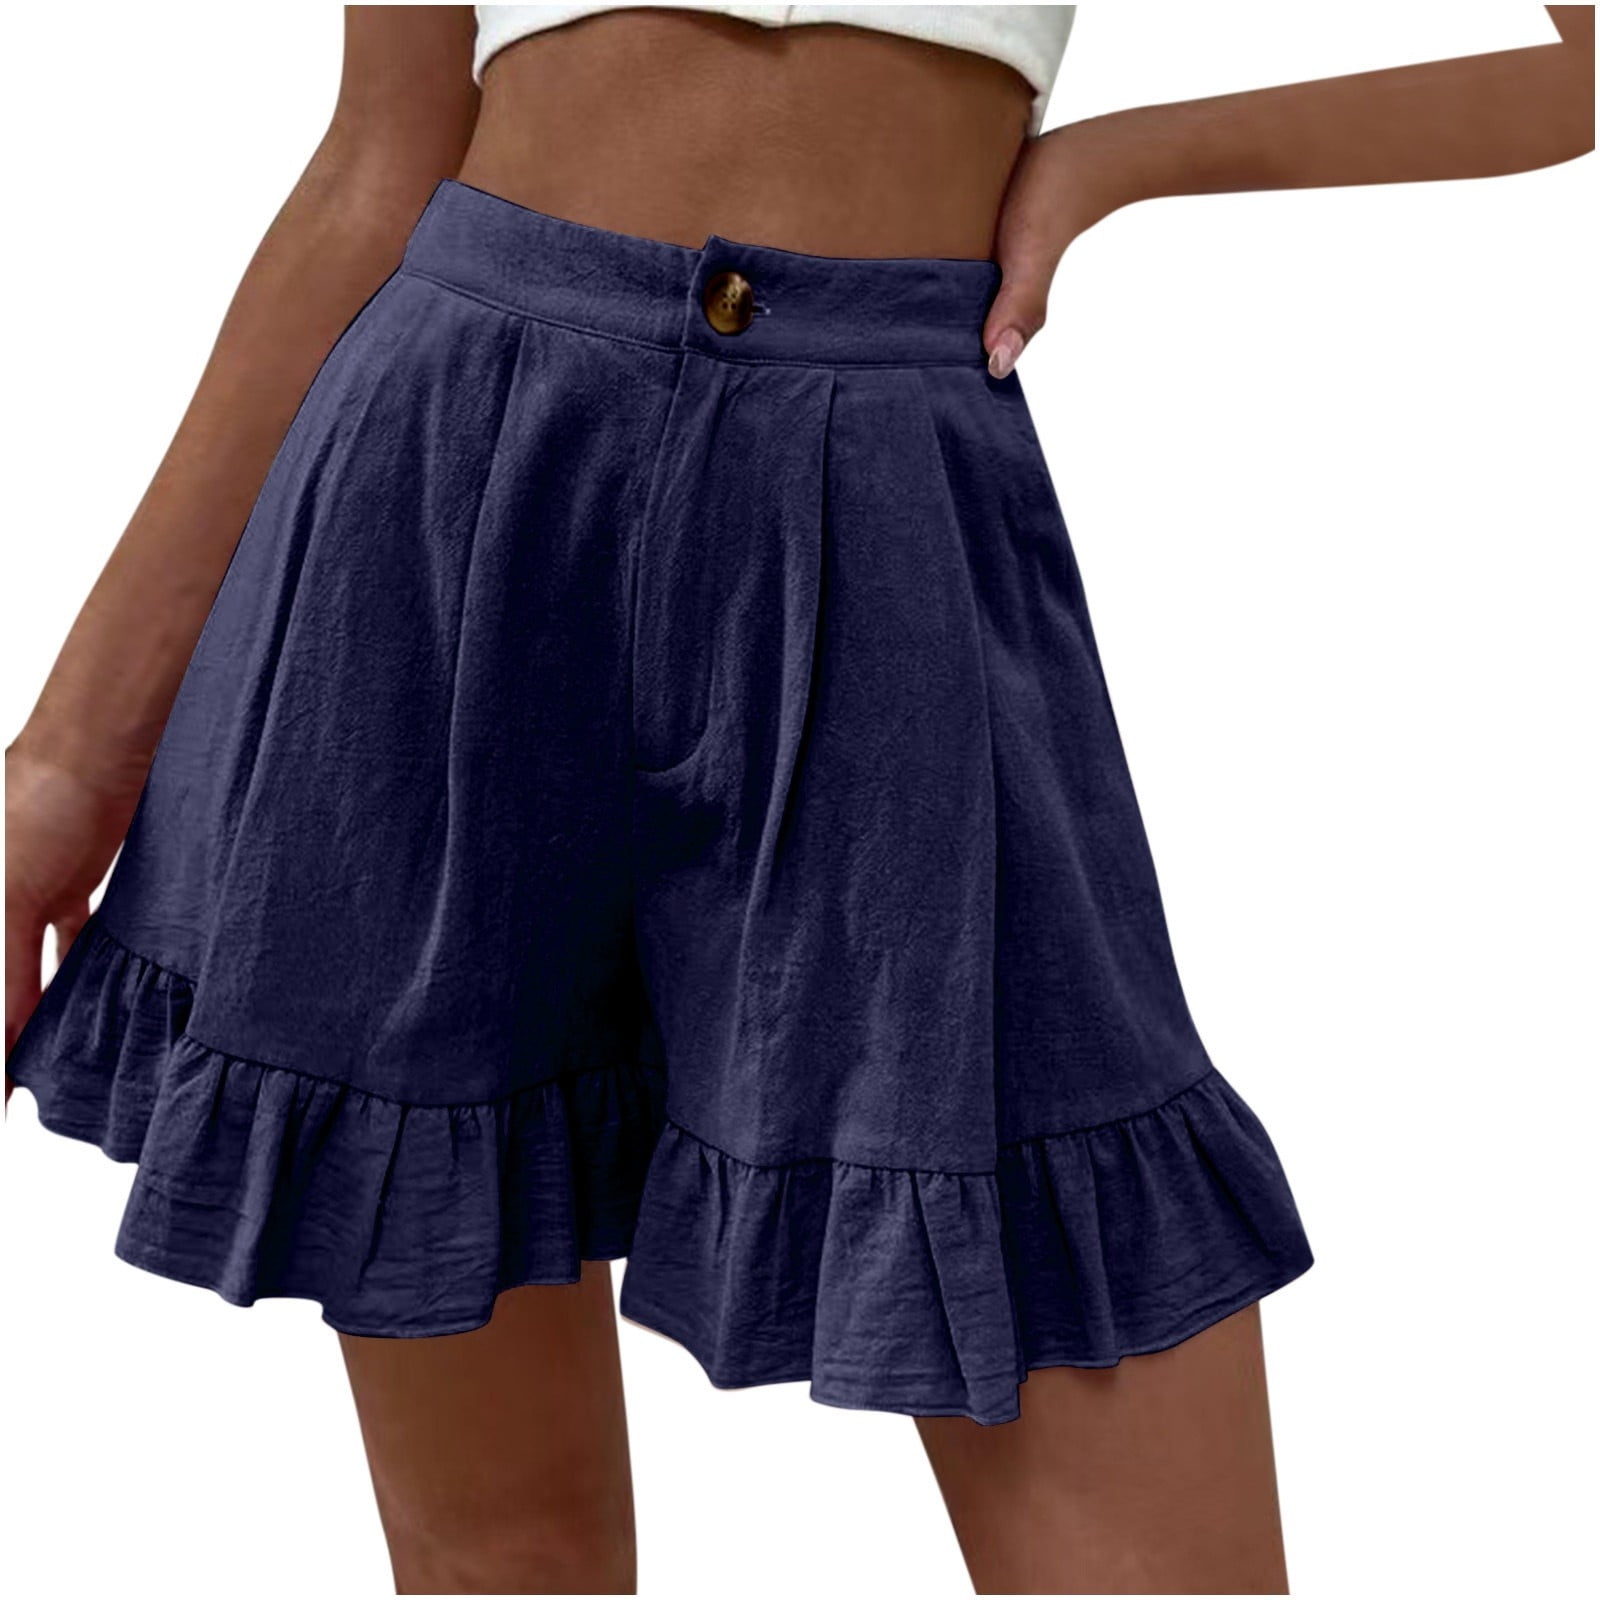 Zodggu Womens Blue Workout Shorts Women Casual Summer Jeans Shorts